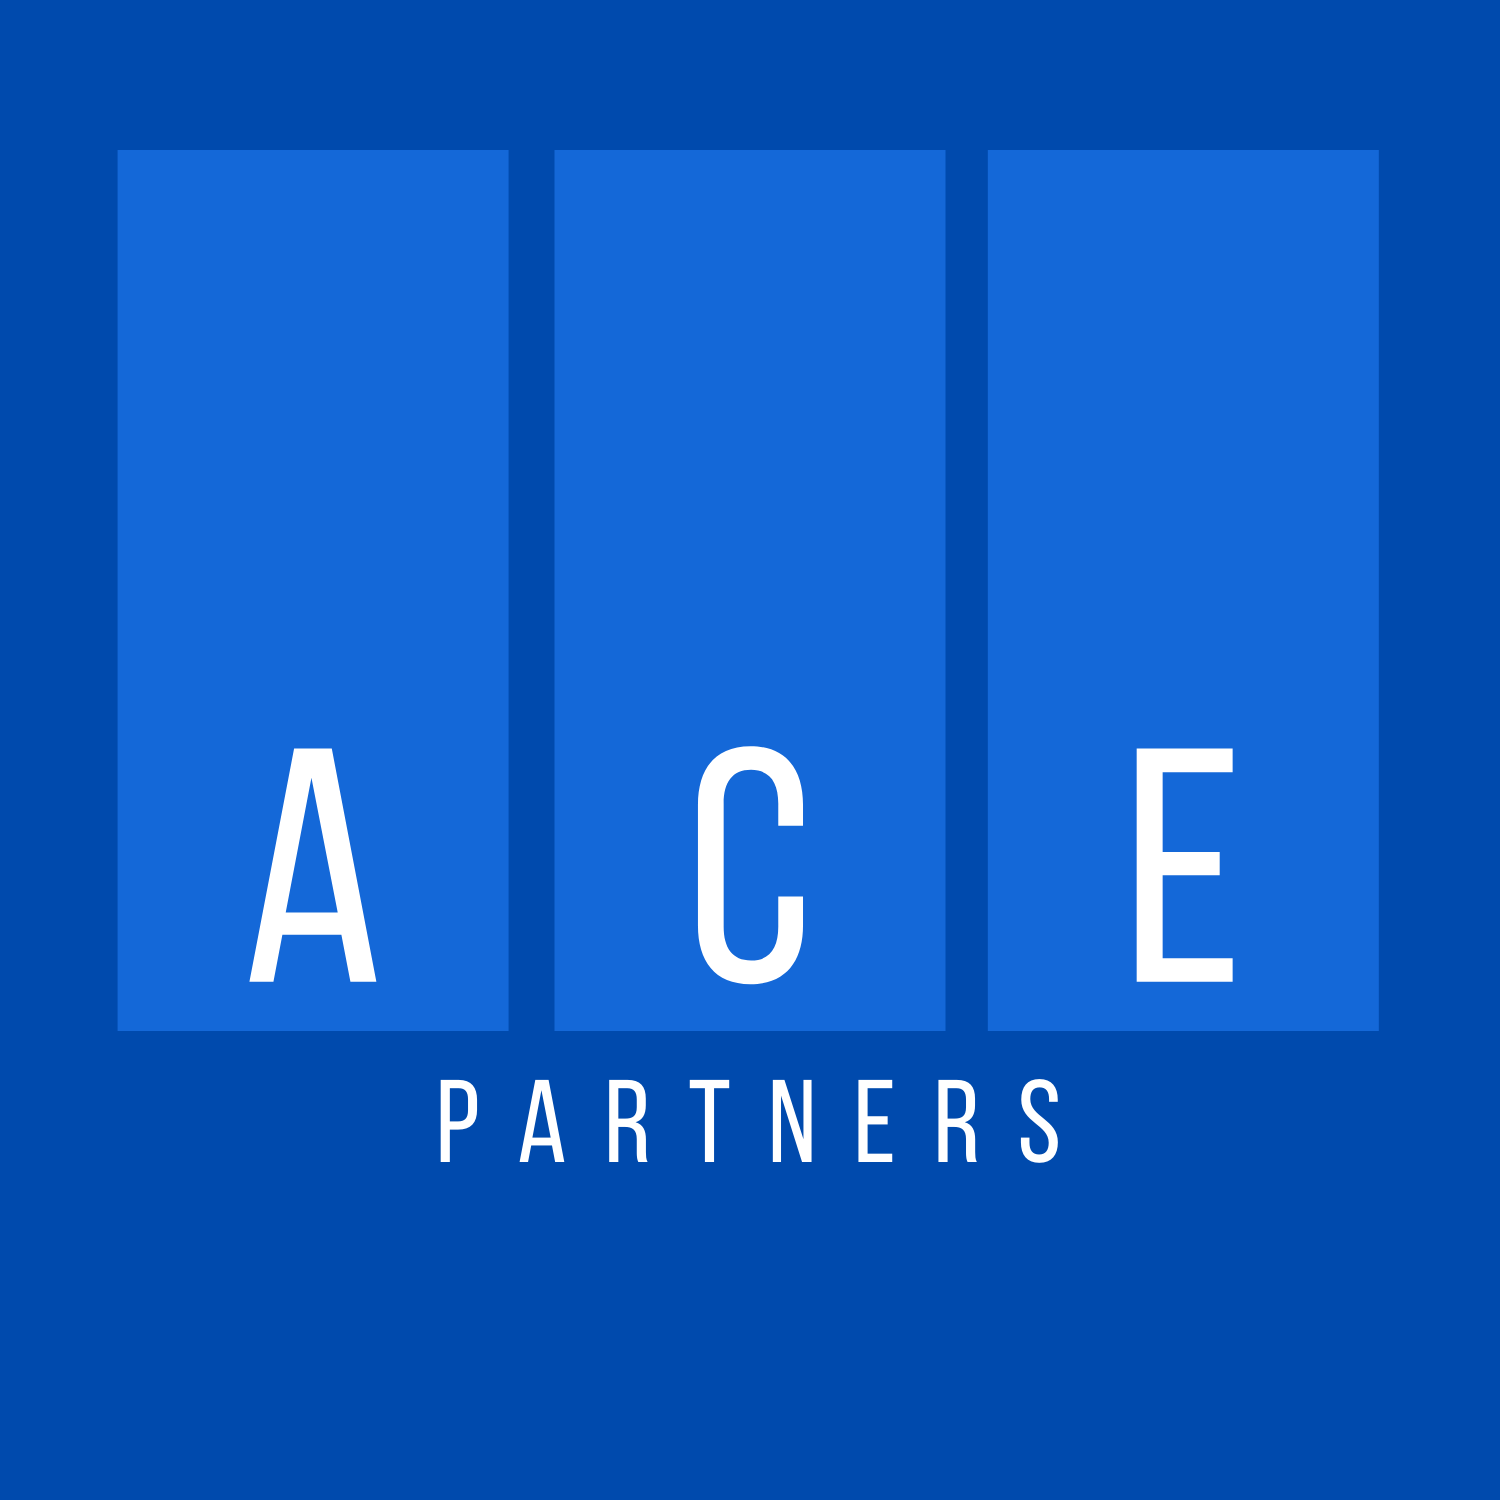 Ace Partners